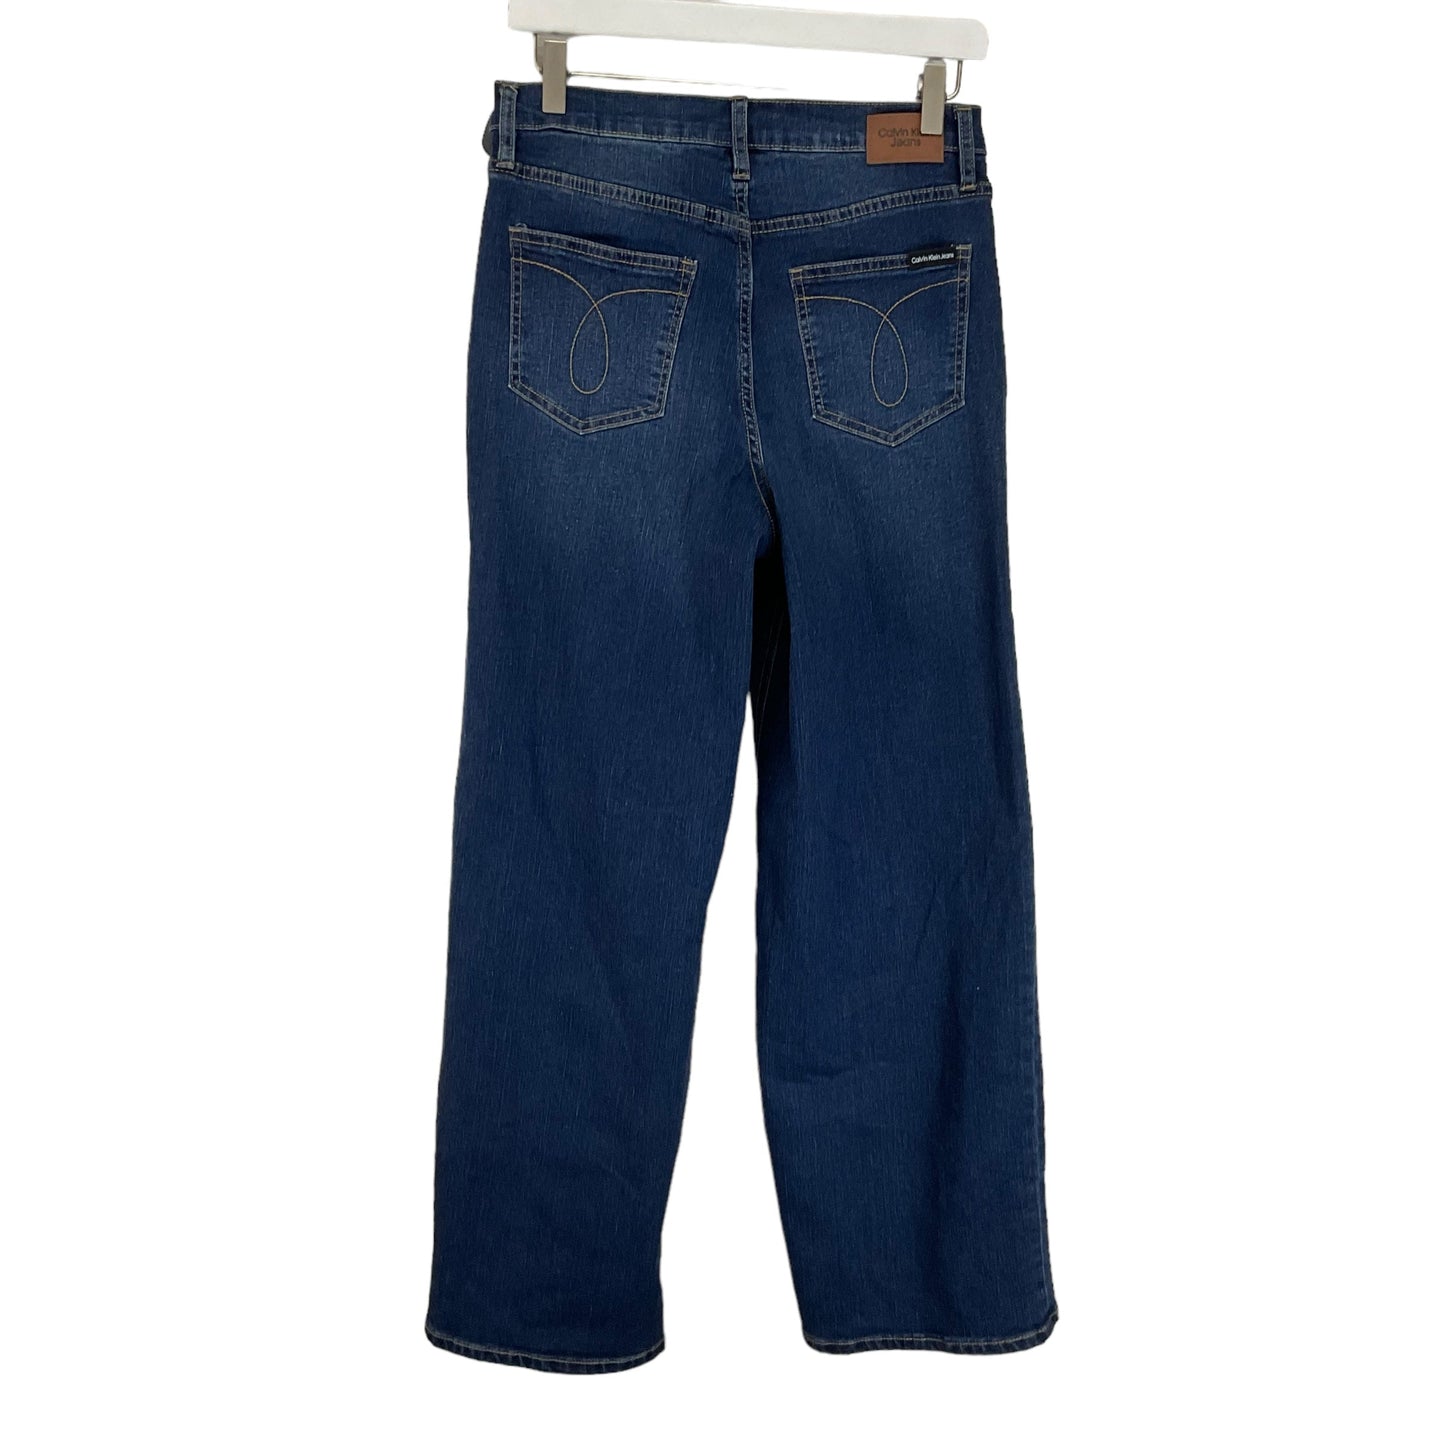 Blue Denim Jeans Boot Cut Calvin Klein, Size 8